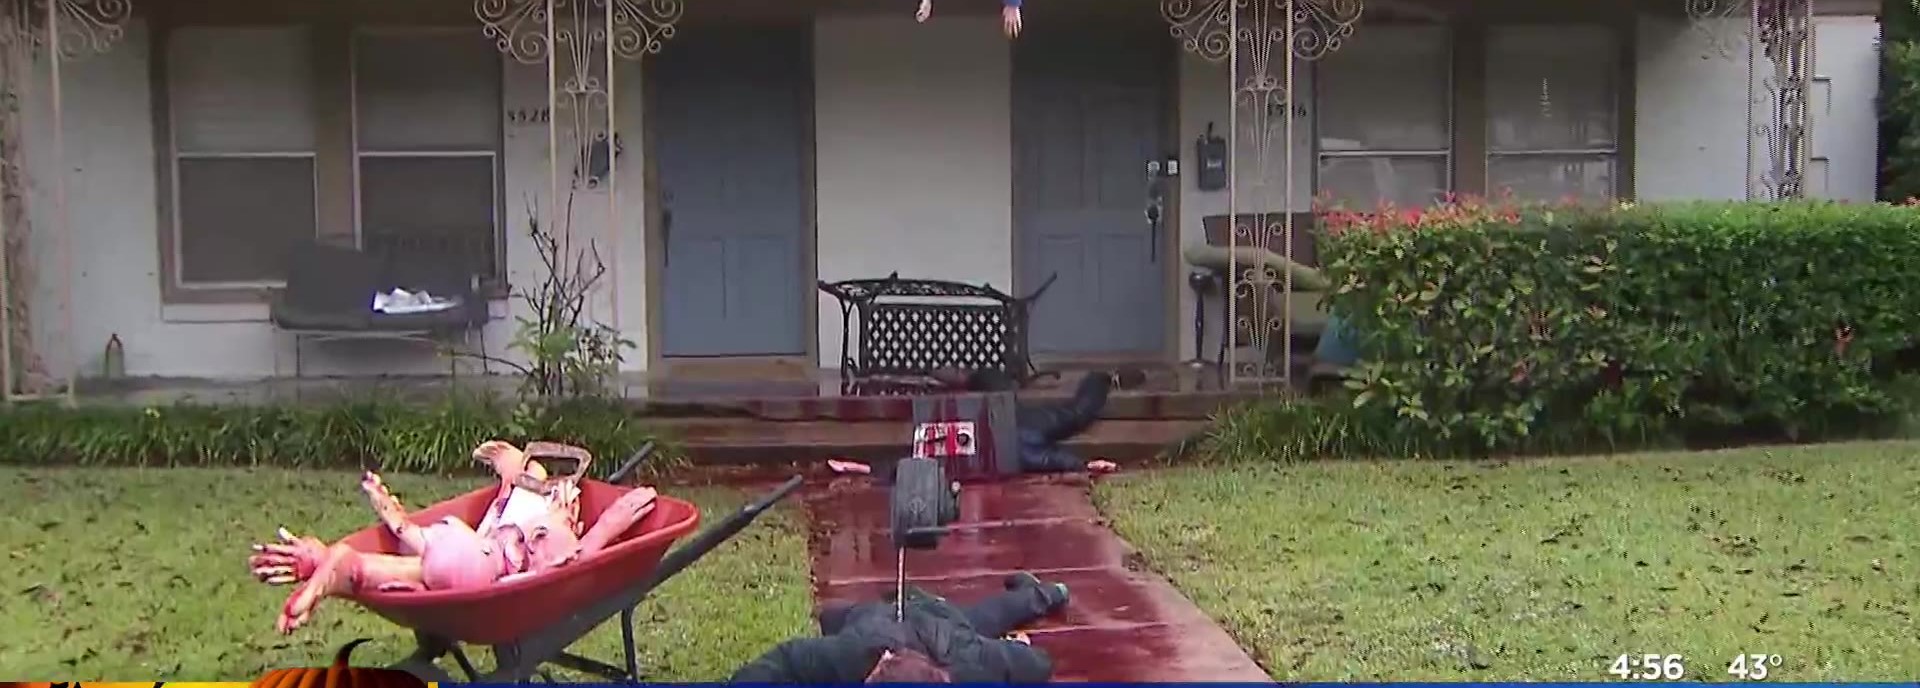 HΠΑ: Άντρας γέμισε την αυλή του με σφαγιασμένα πτώματα για το… Halloween (βίντεο)